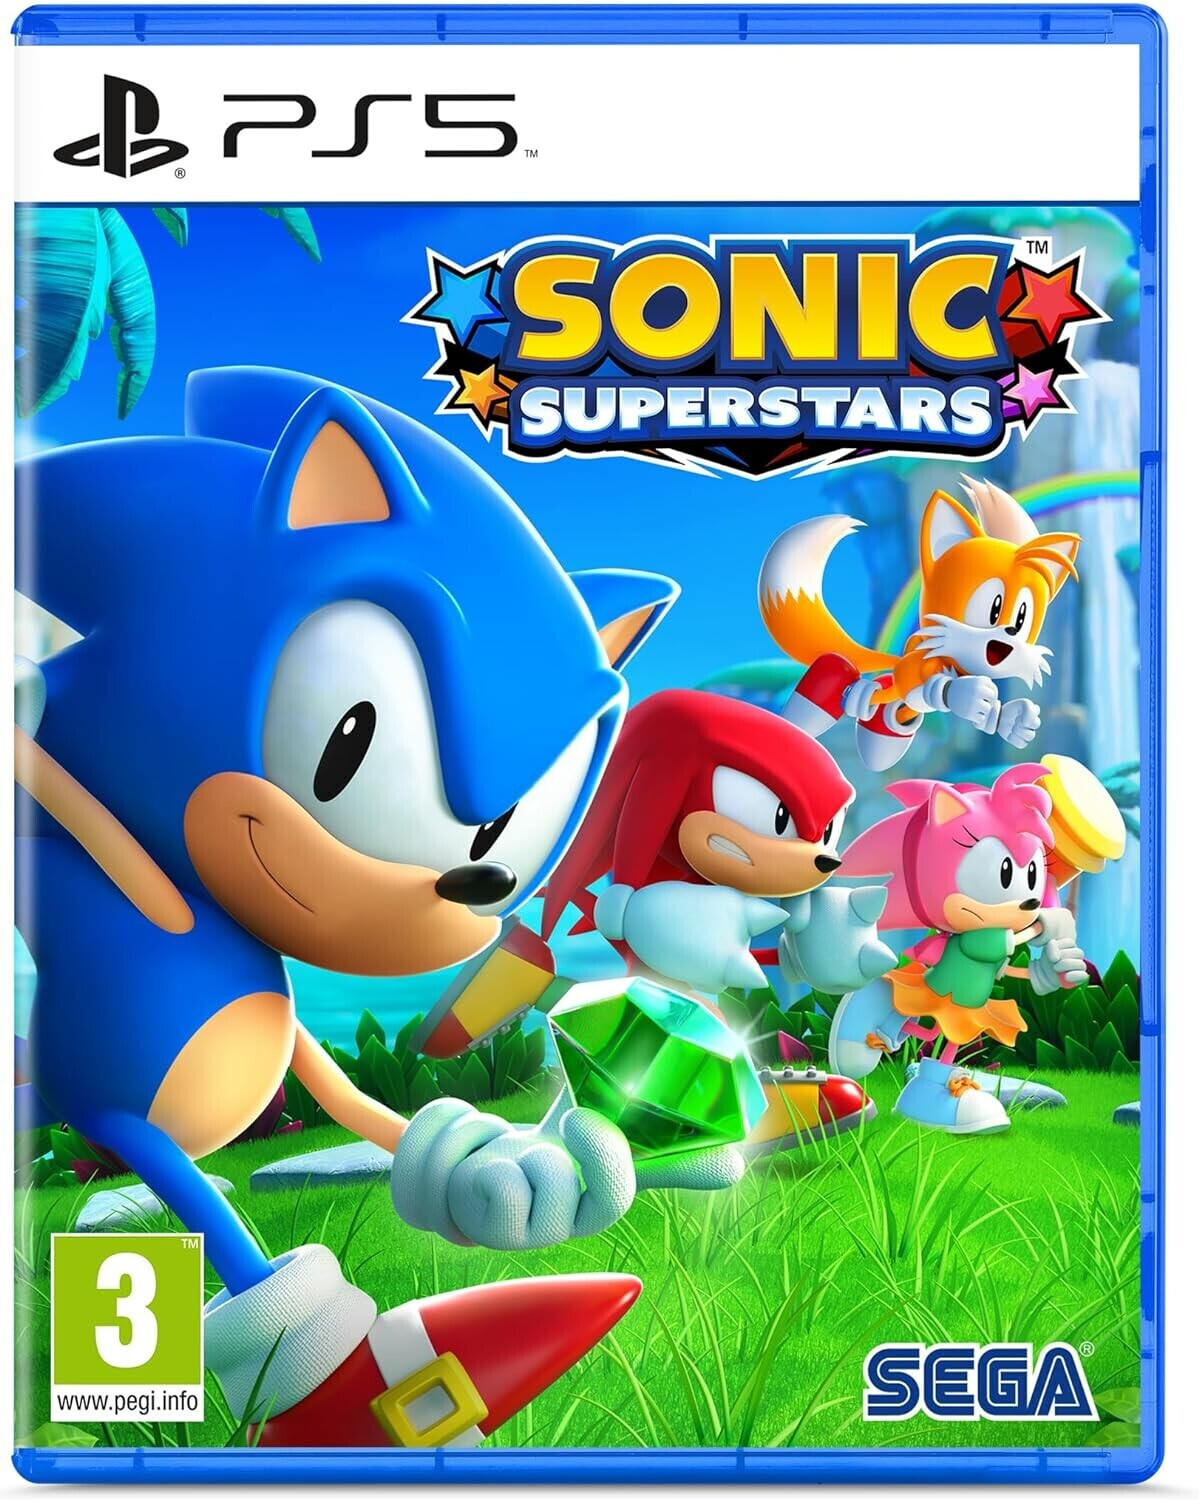 Photos - Game Sega Sonic Superstars  (Switch)